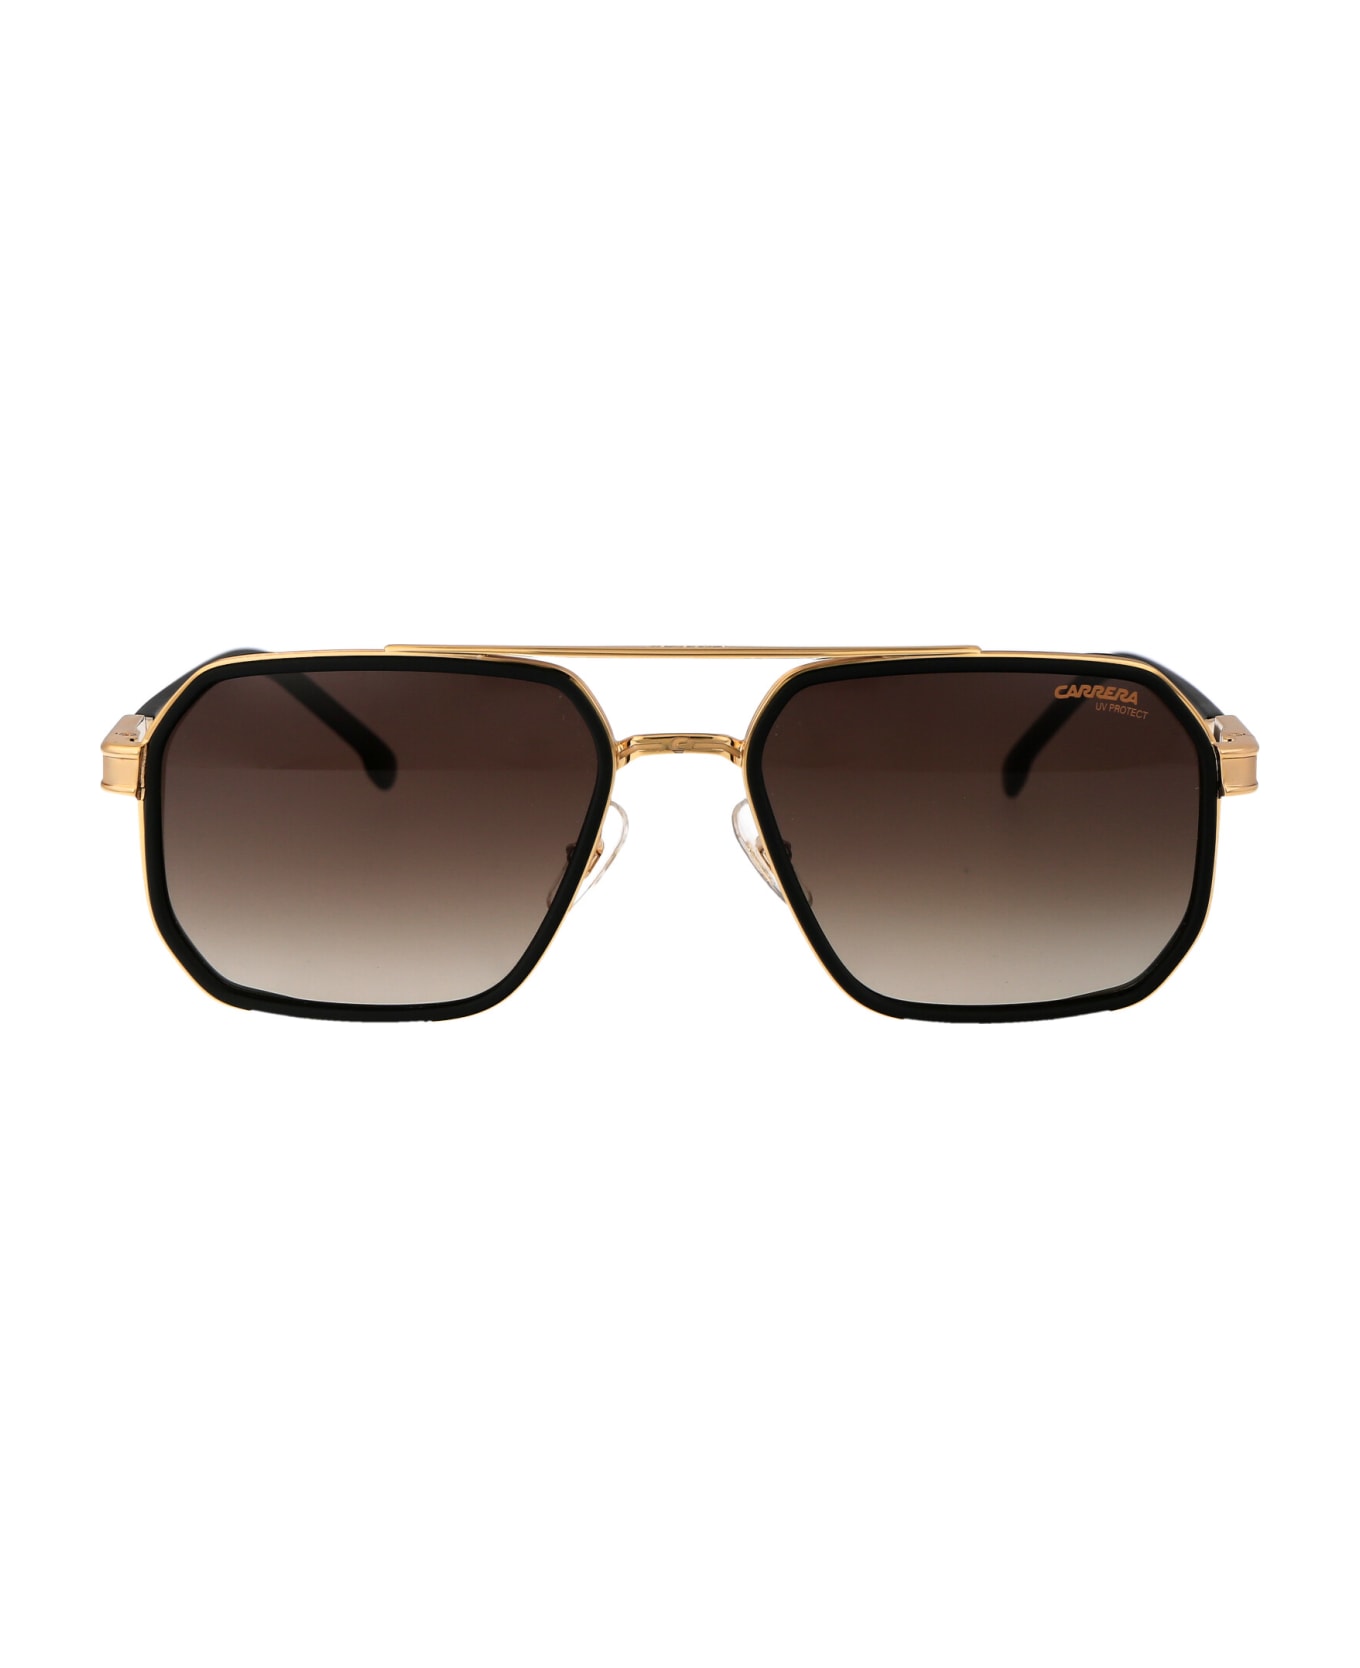 Carrera 1069/s Sunglasses - I4686 MT BK GD